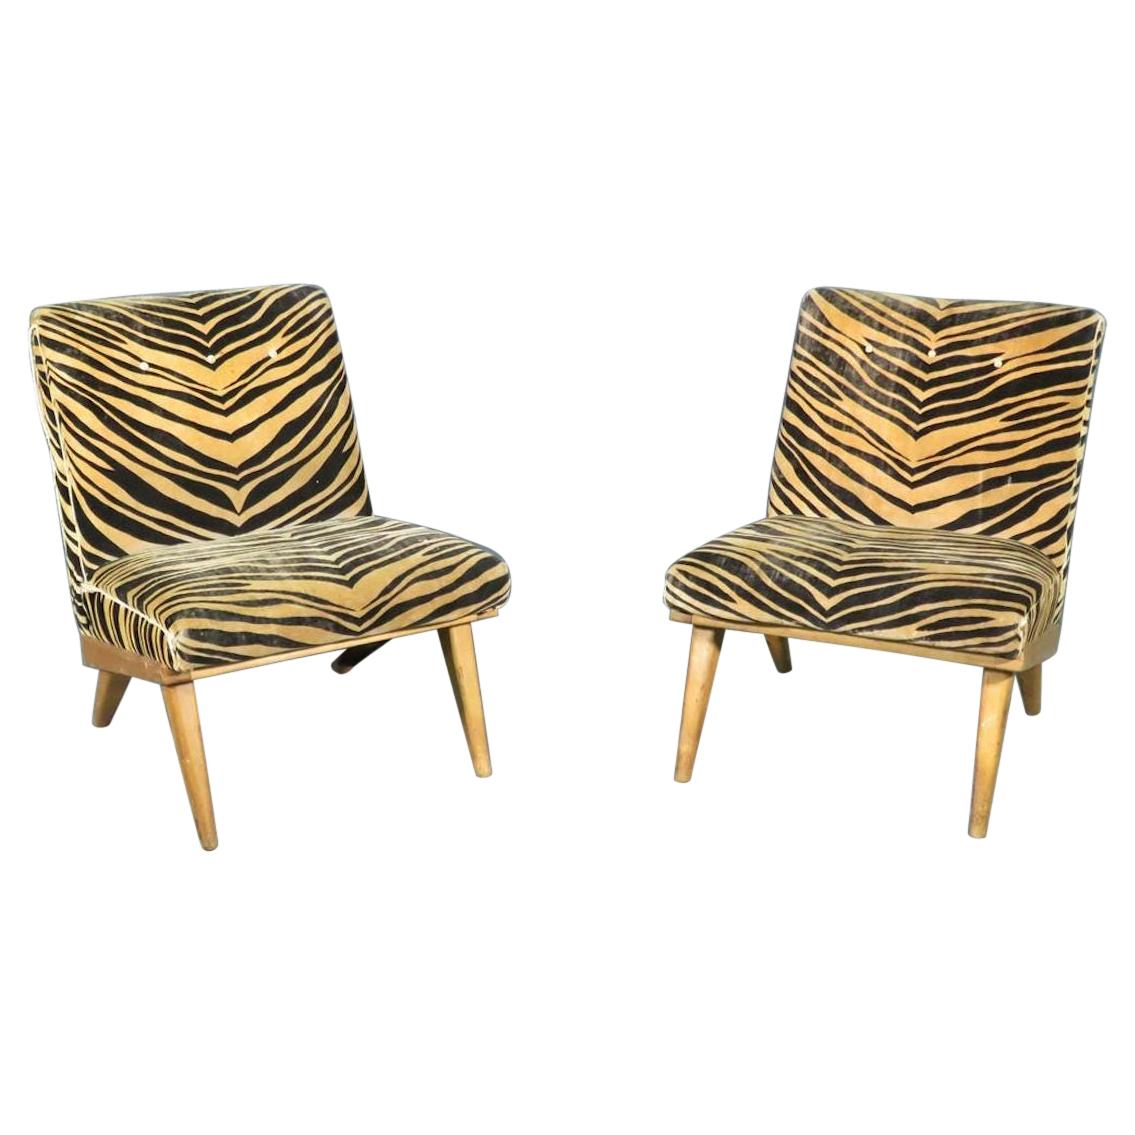 Pair of Vintage Zebra Print Lounge Chairs